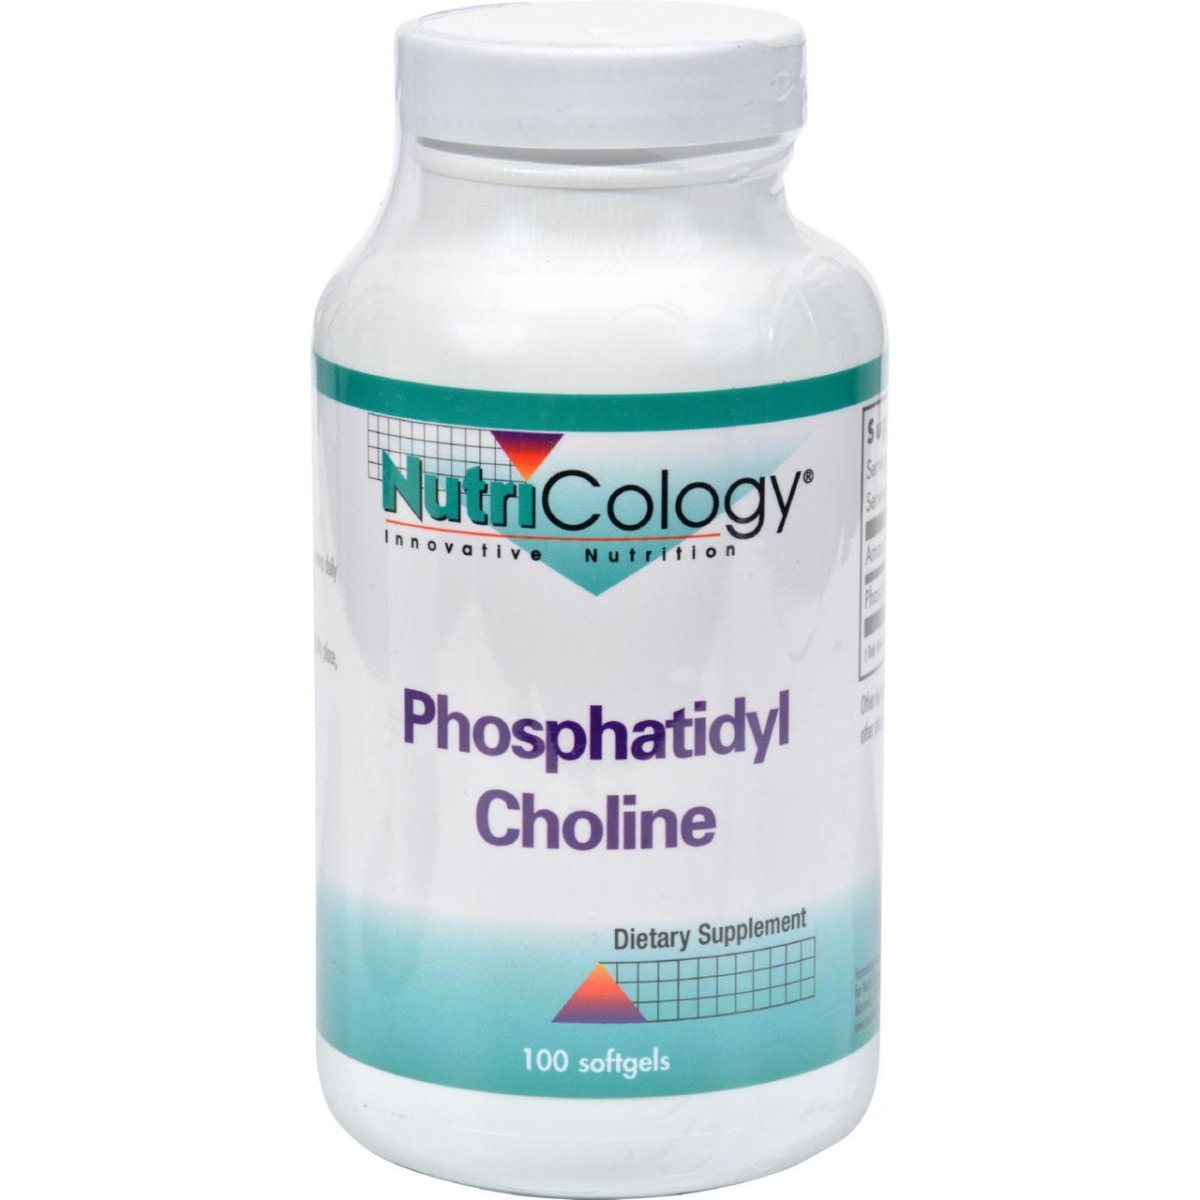 Hg0524470 Phosphatidyl Choline - 100 Softgels